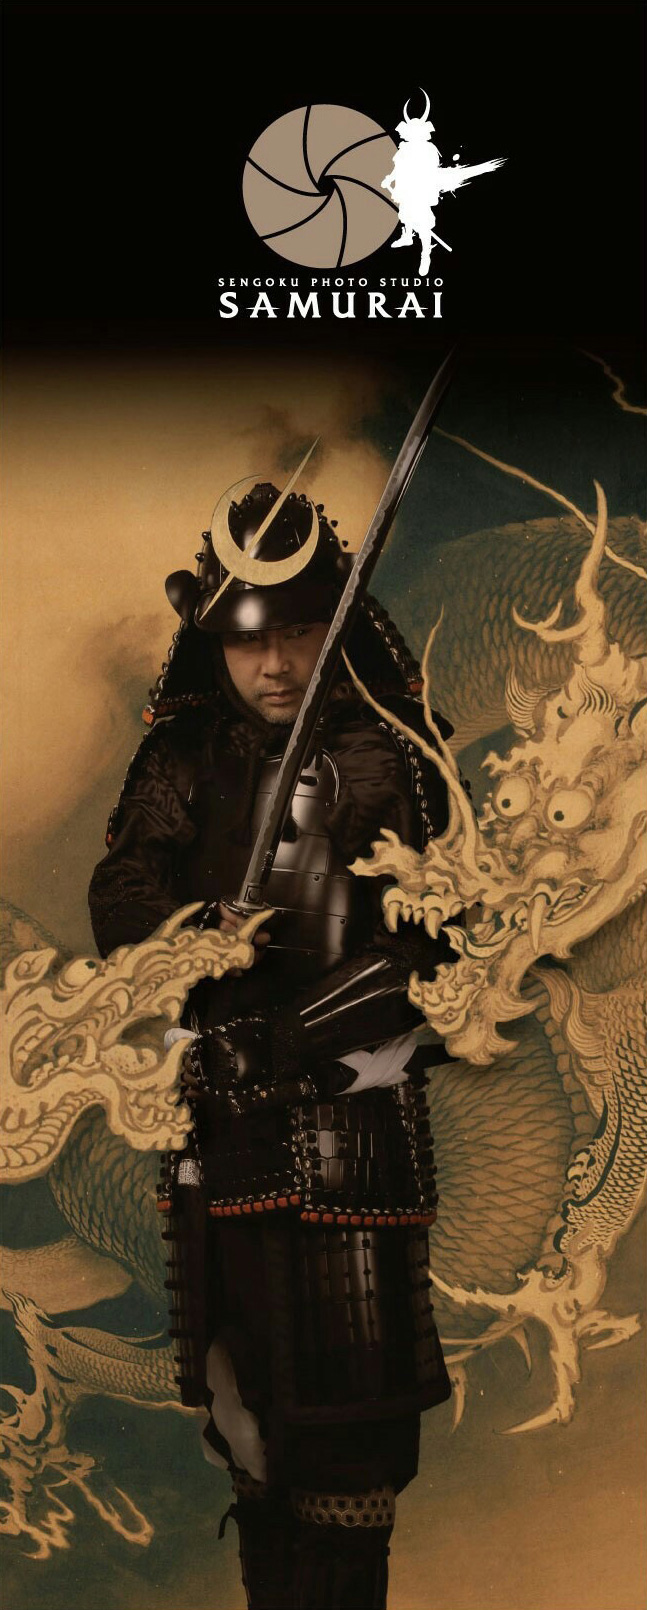 Kamui in Samurai armor suits